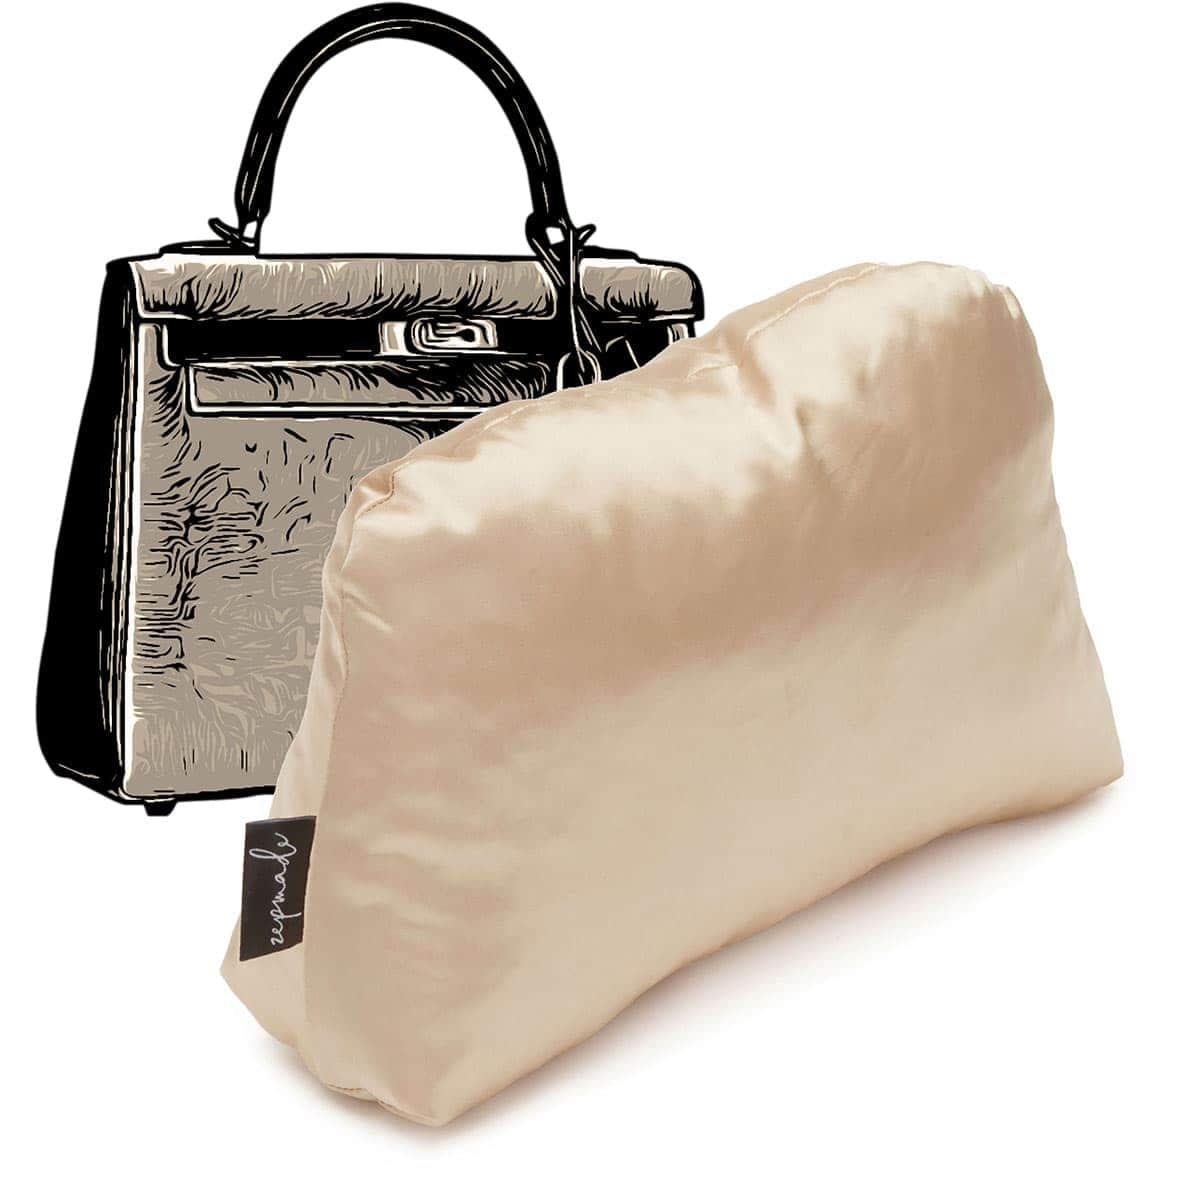 Purse Pillow for Hermes Kelly Bag Models, Bag Shaper Pillow, Purse Sto -  Zepmade